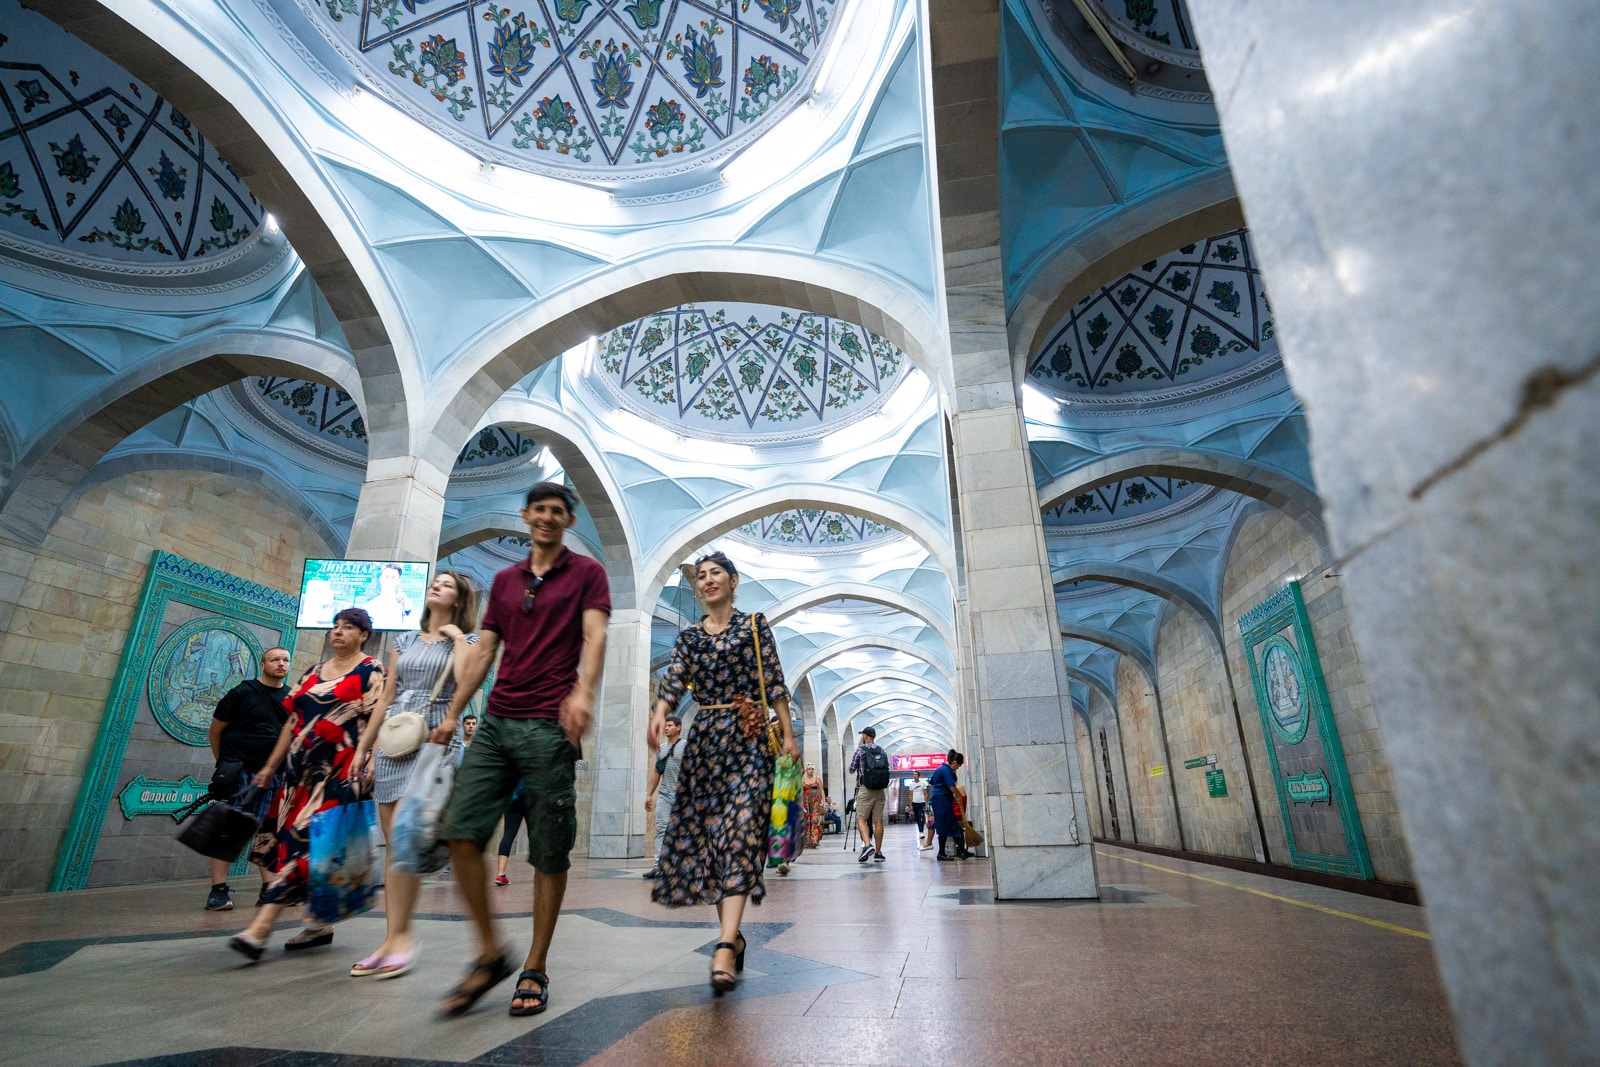 People walking in Alisher Navoi Metro station in Tashkent, Uzbekistan